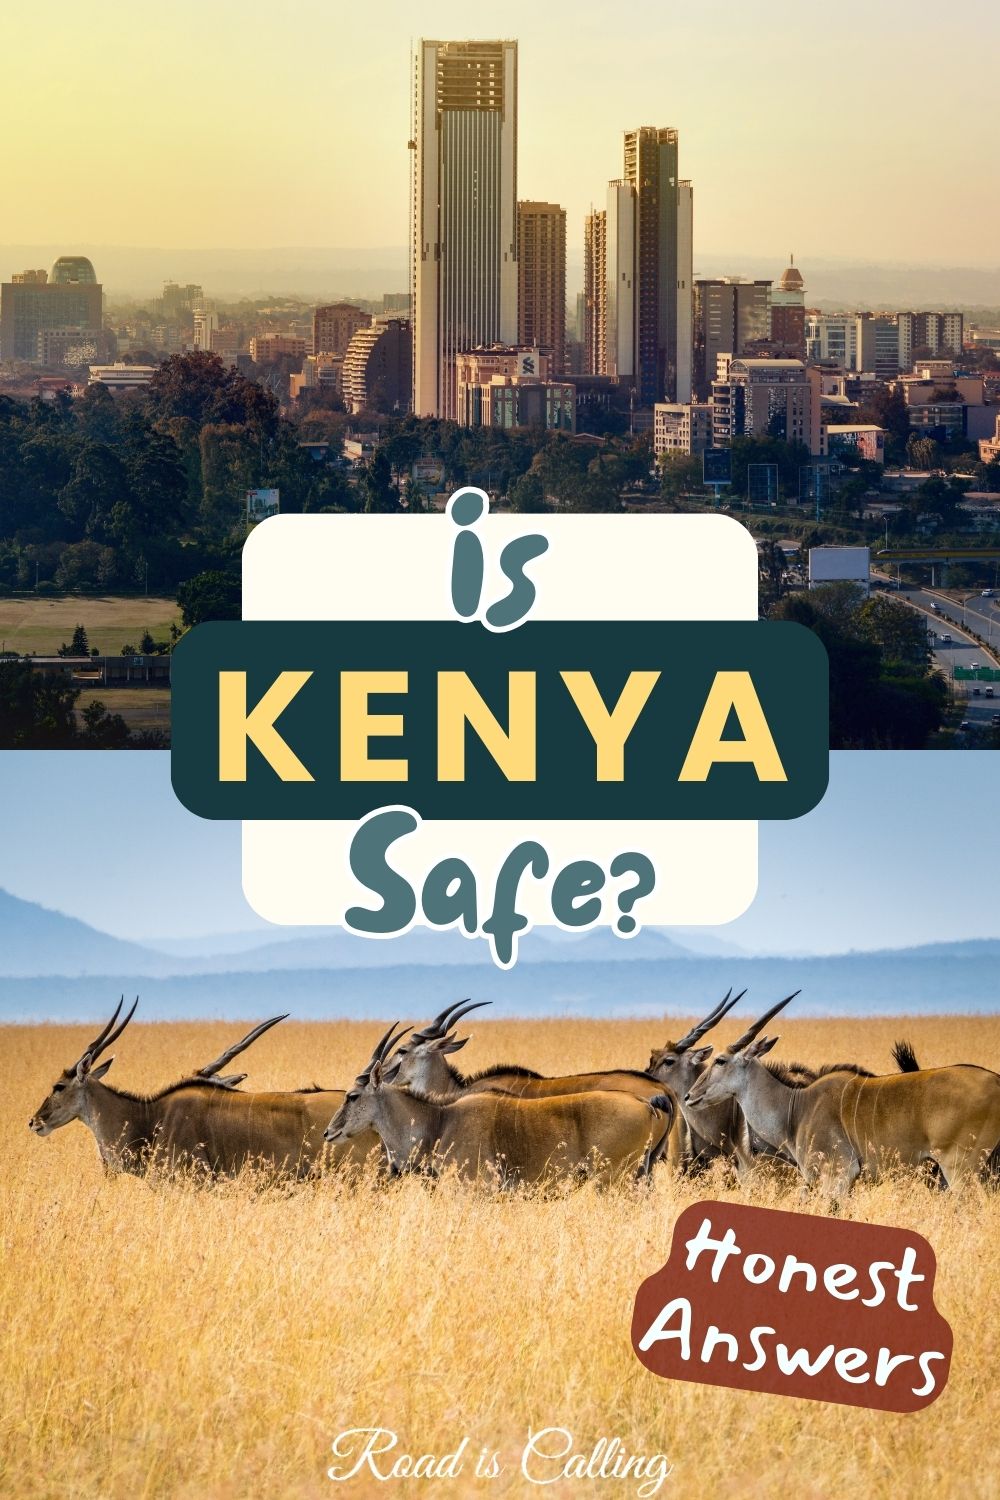 Kenya safety travel guide